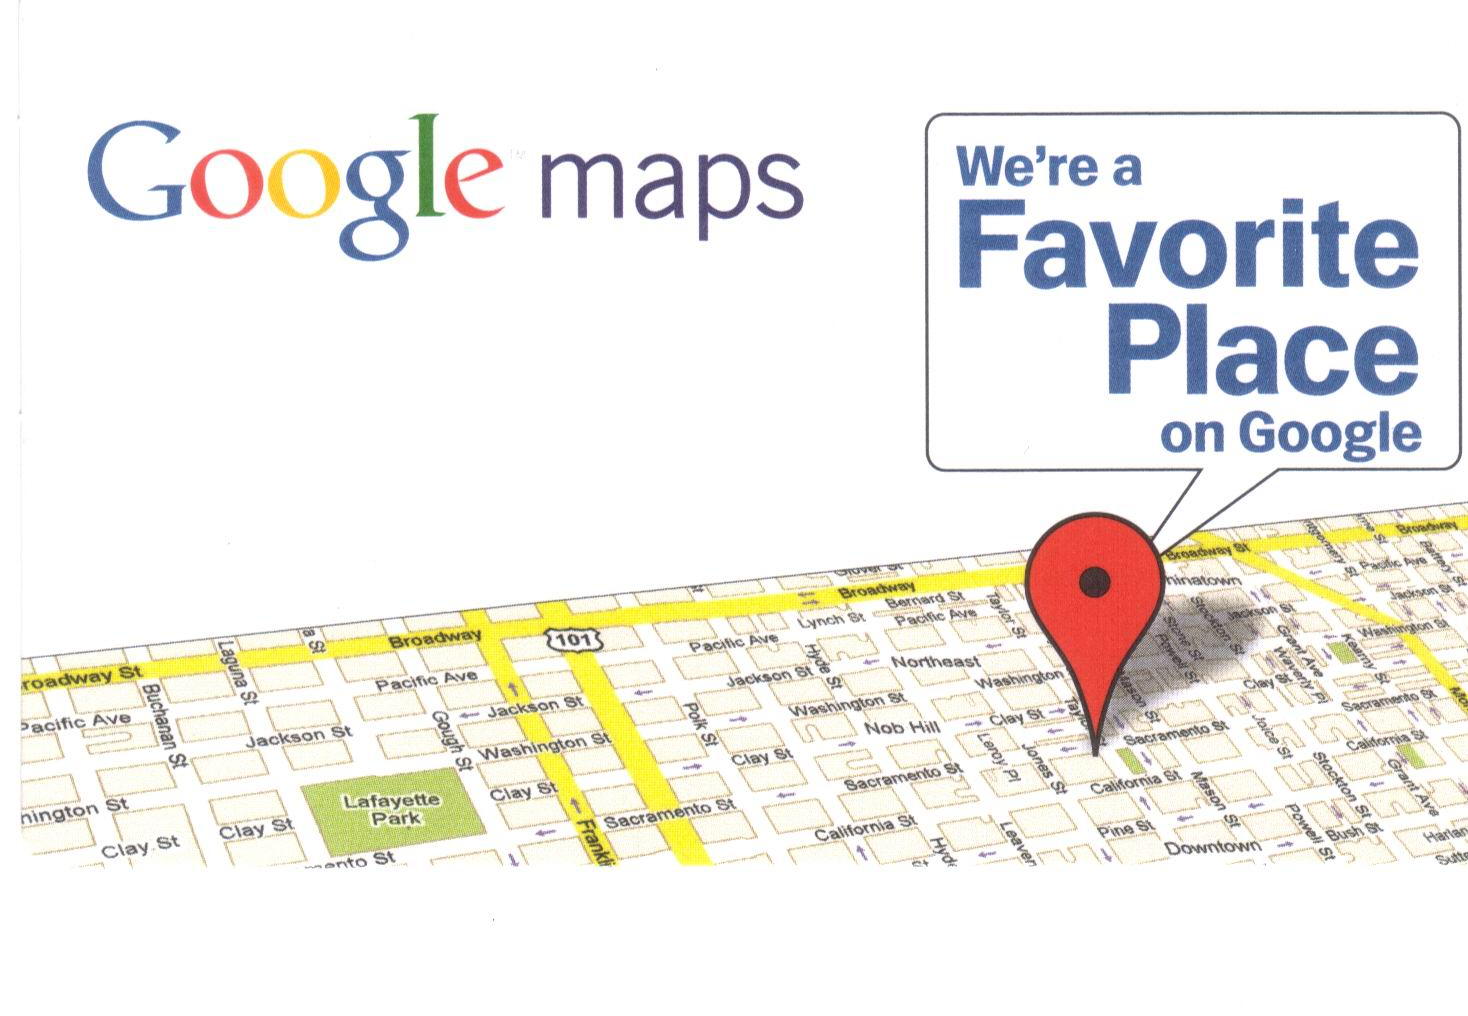 App Google Maps